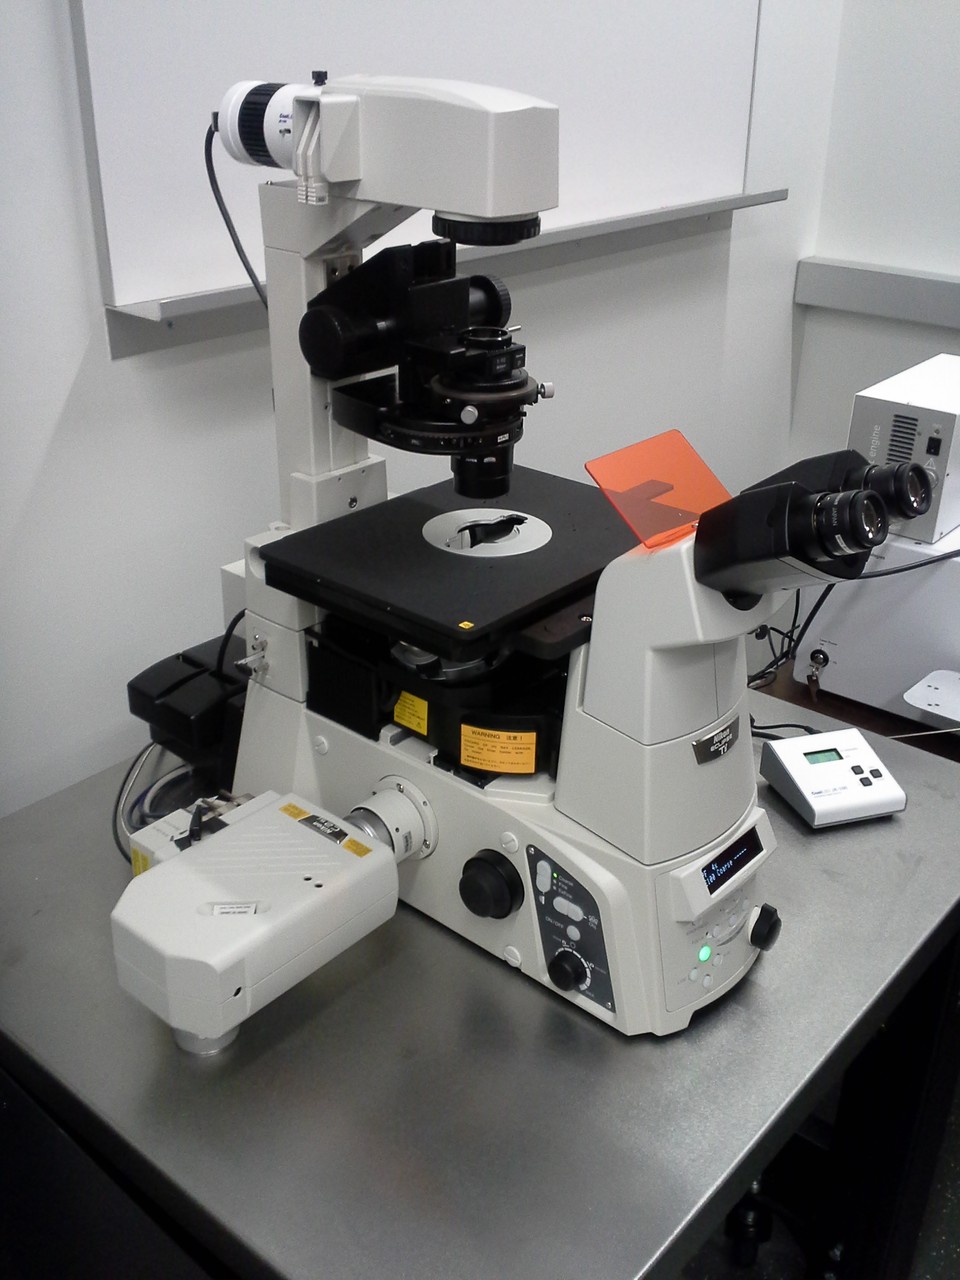 Confocal Microscope